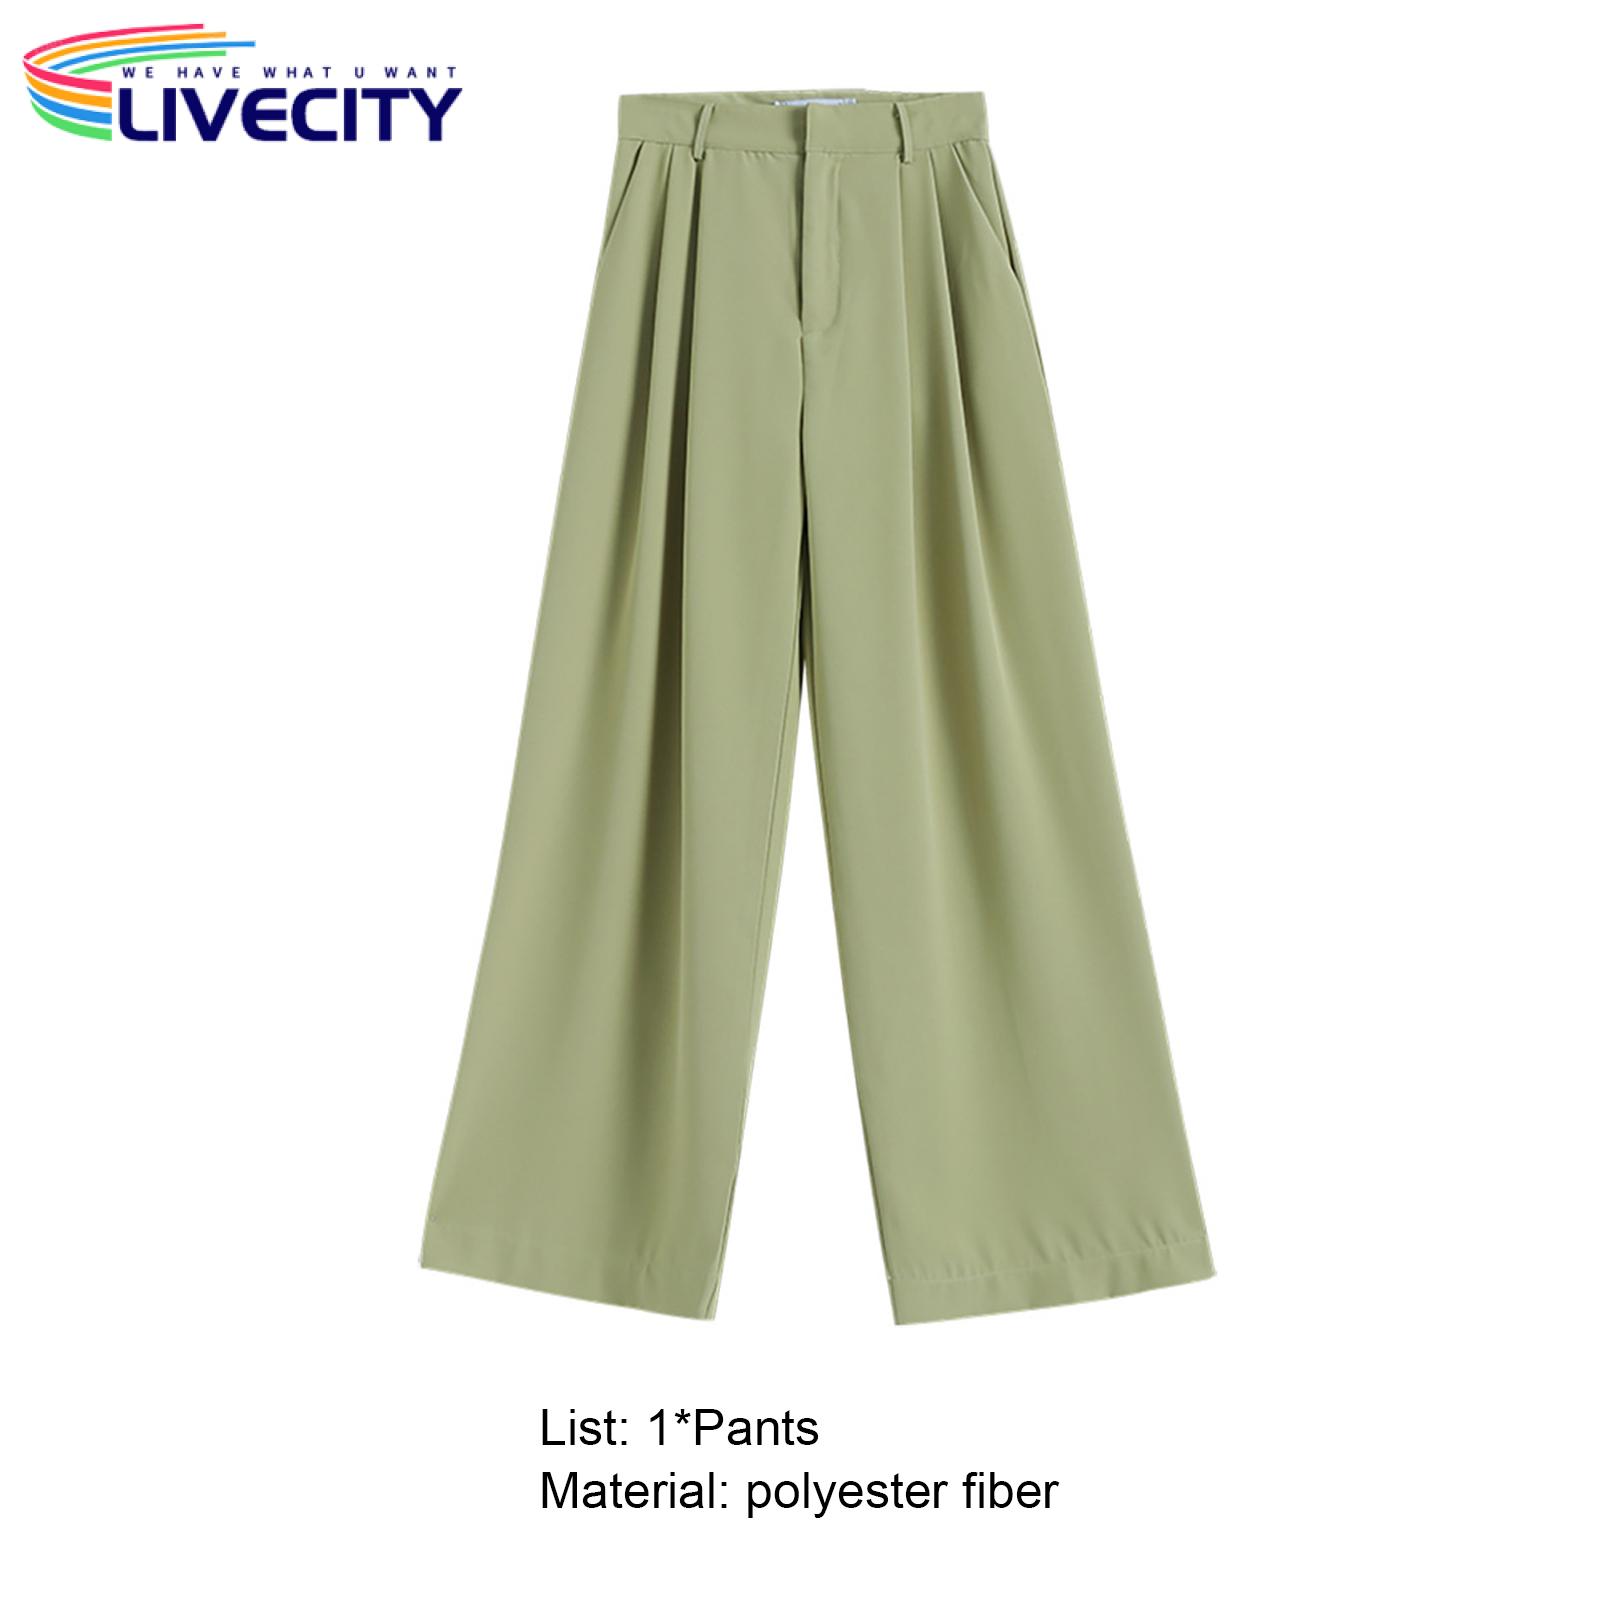 homspun Wool tapered pants size M list price 27000 yen Charcoal gray  30130T  eBay